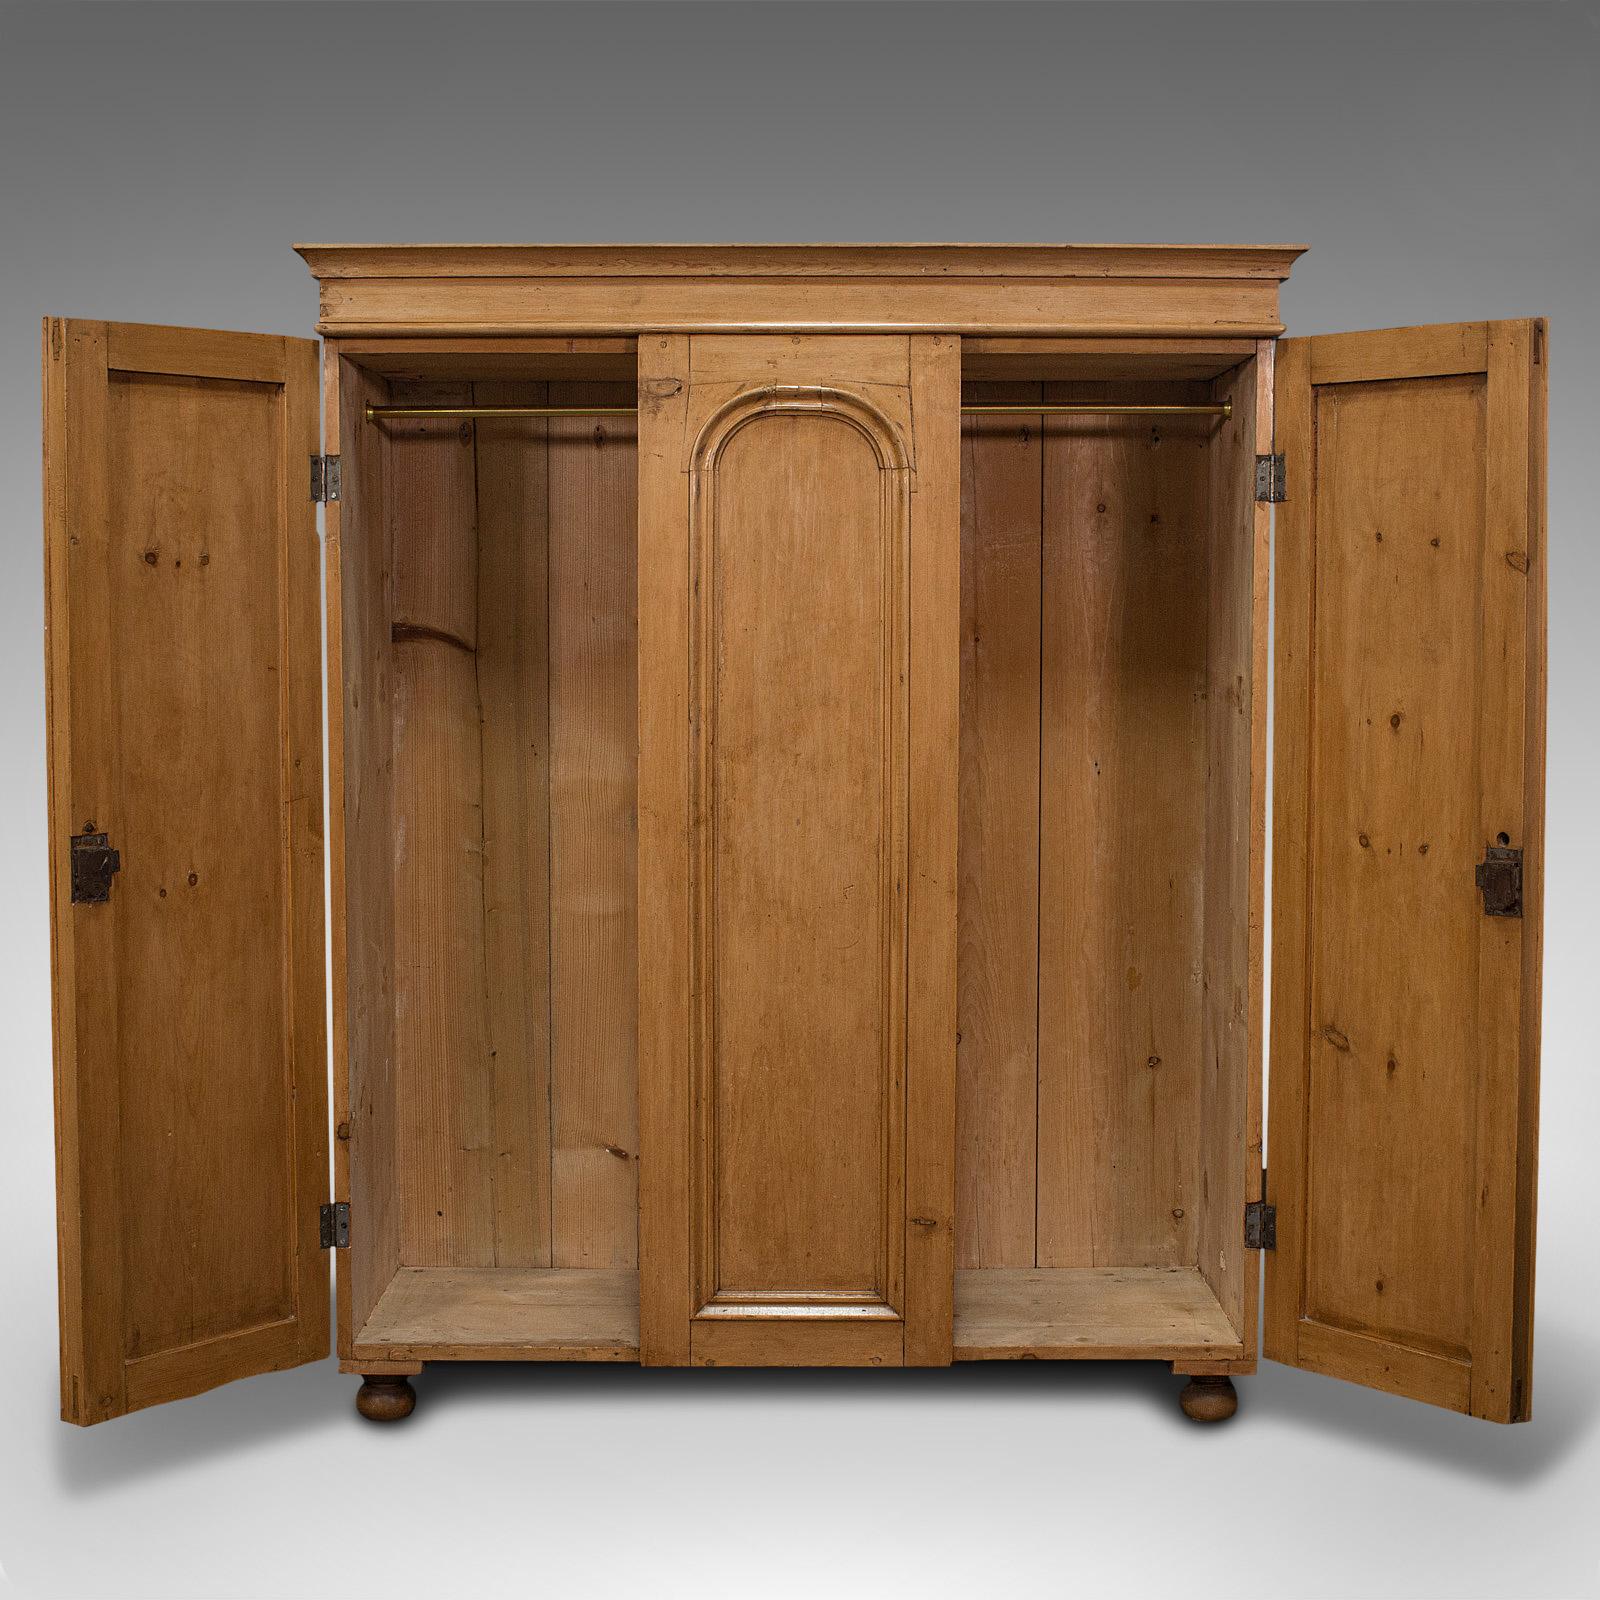 British Antique Three Panel Wardrobe, English, Pine, Cupboard, Closet, Victorian, C.1900